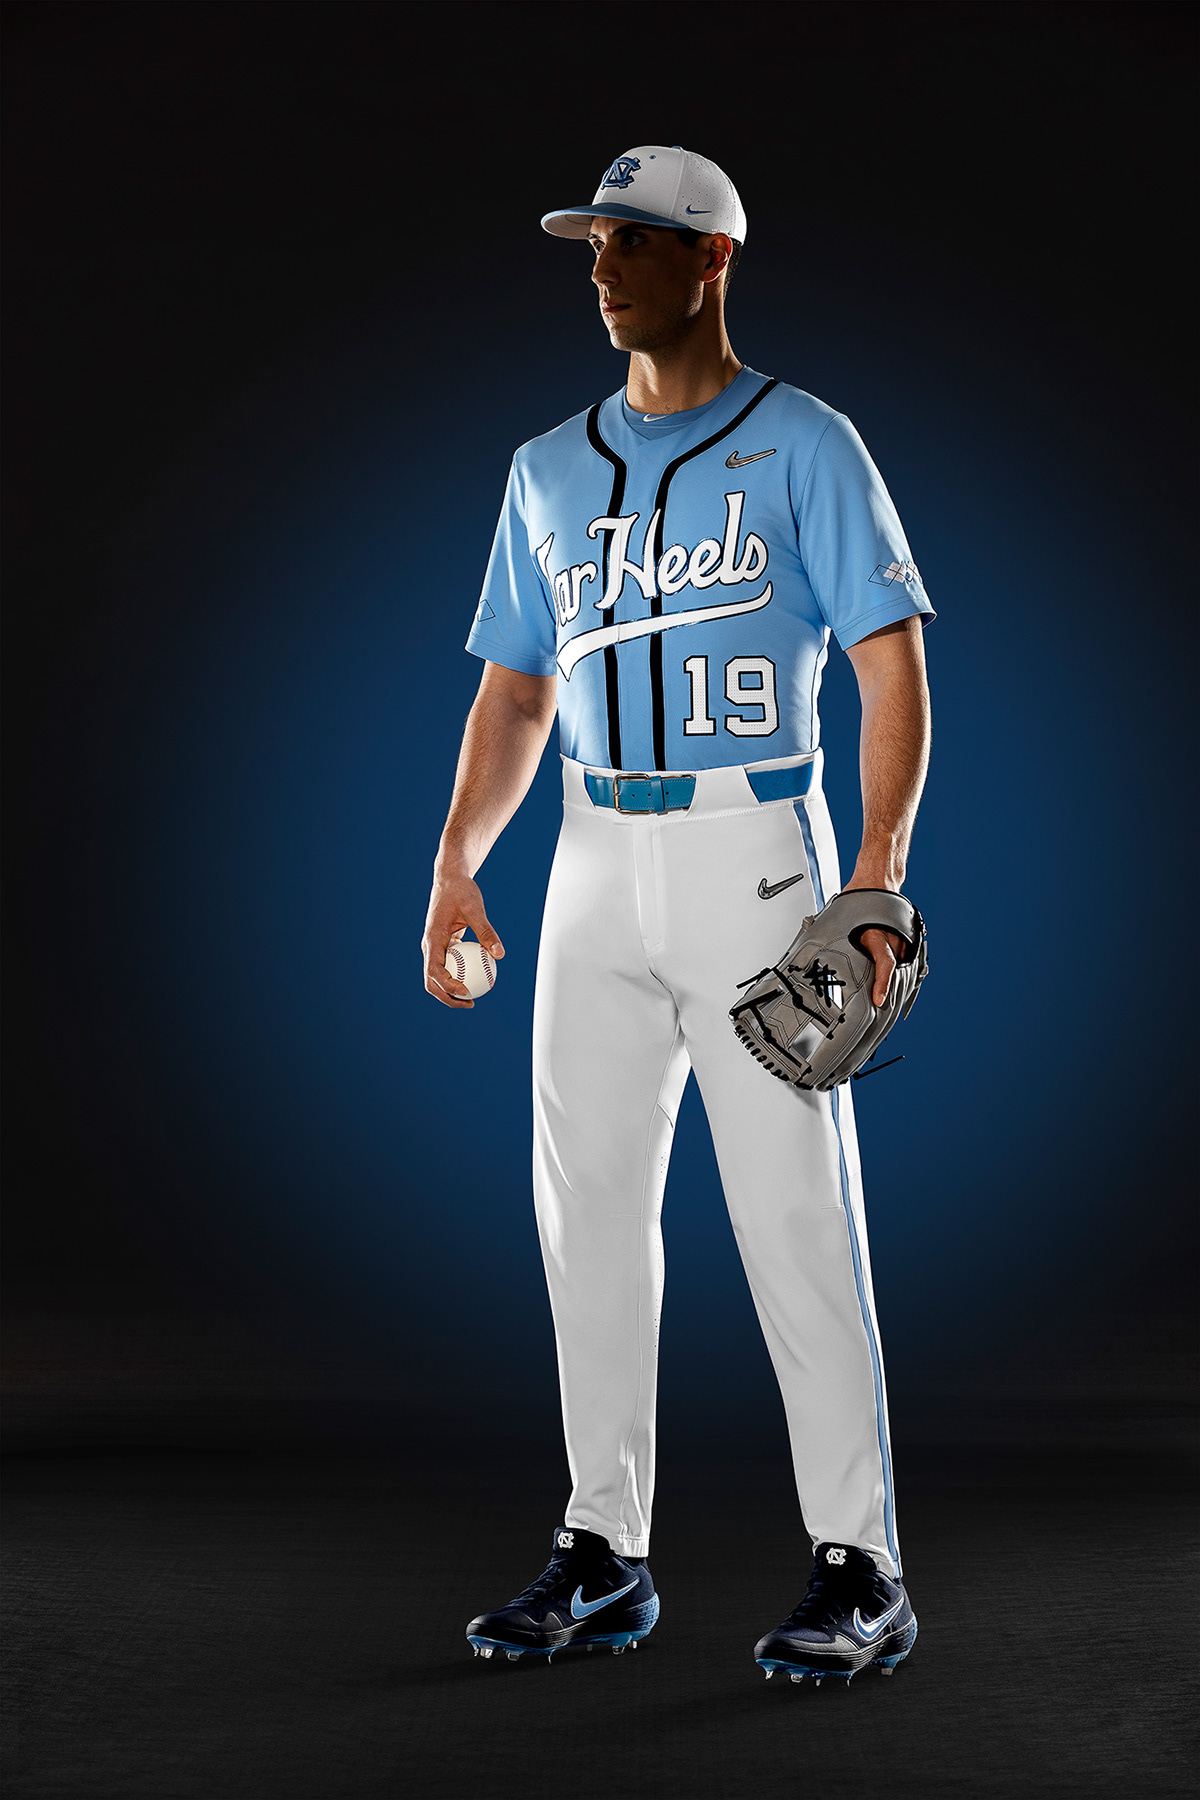 Nike baseball uniform jersey dramatic edgy portrait college NCAA